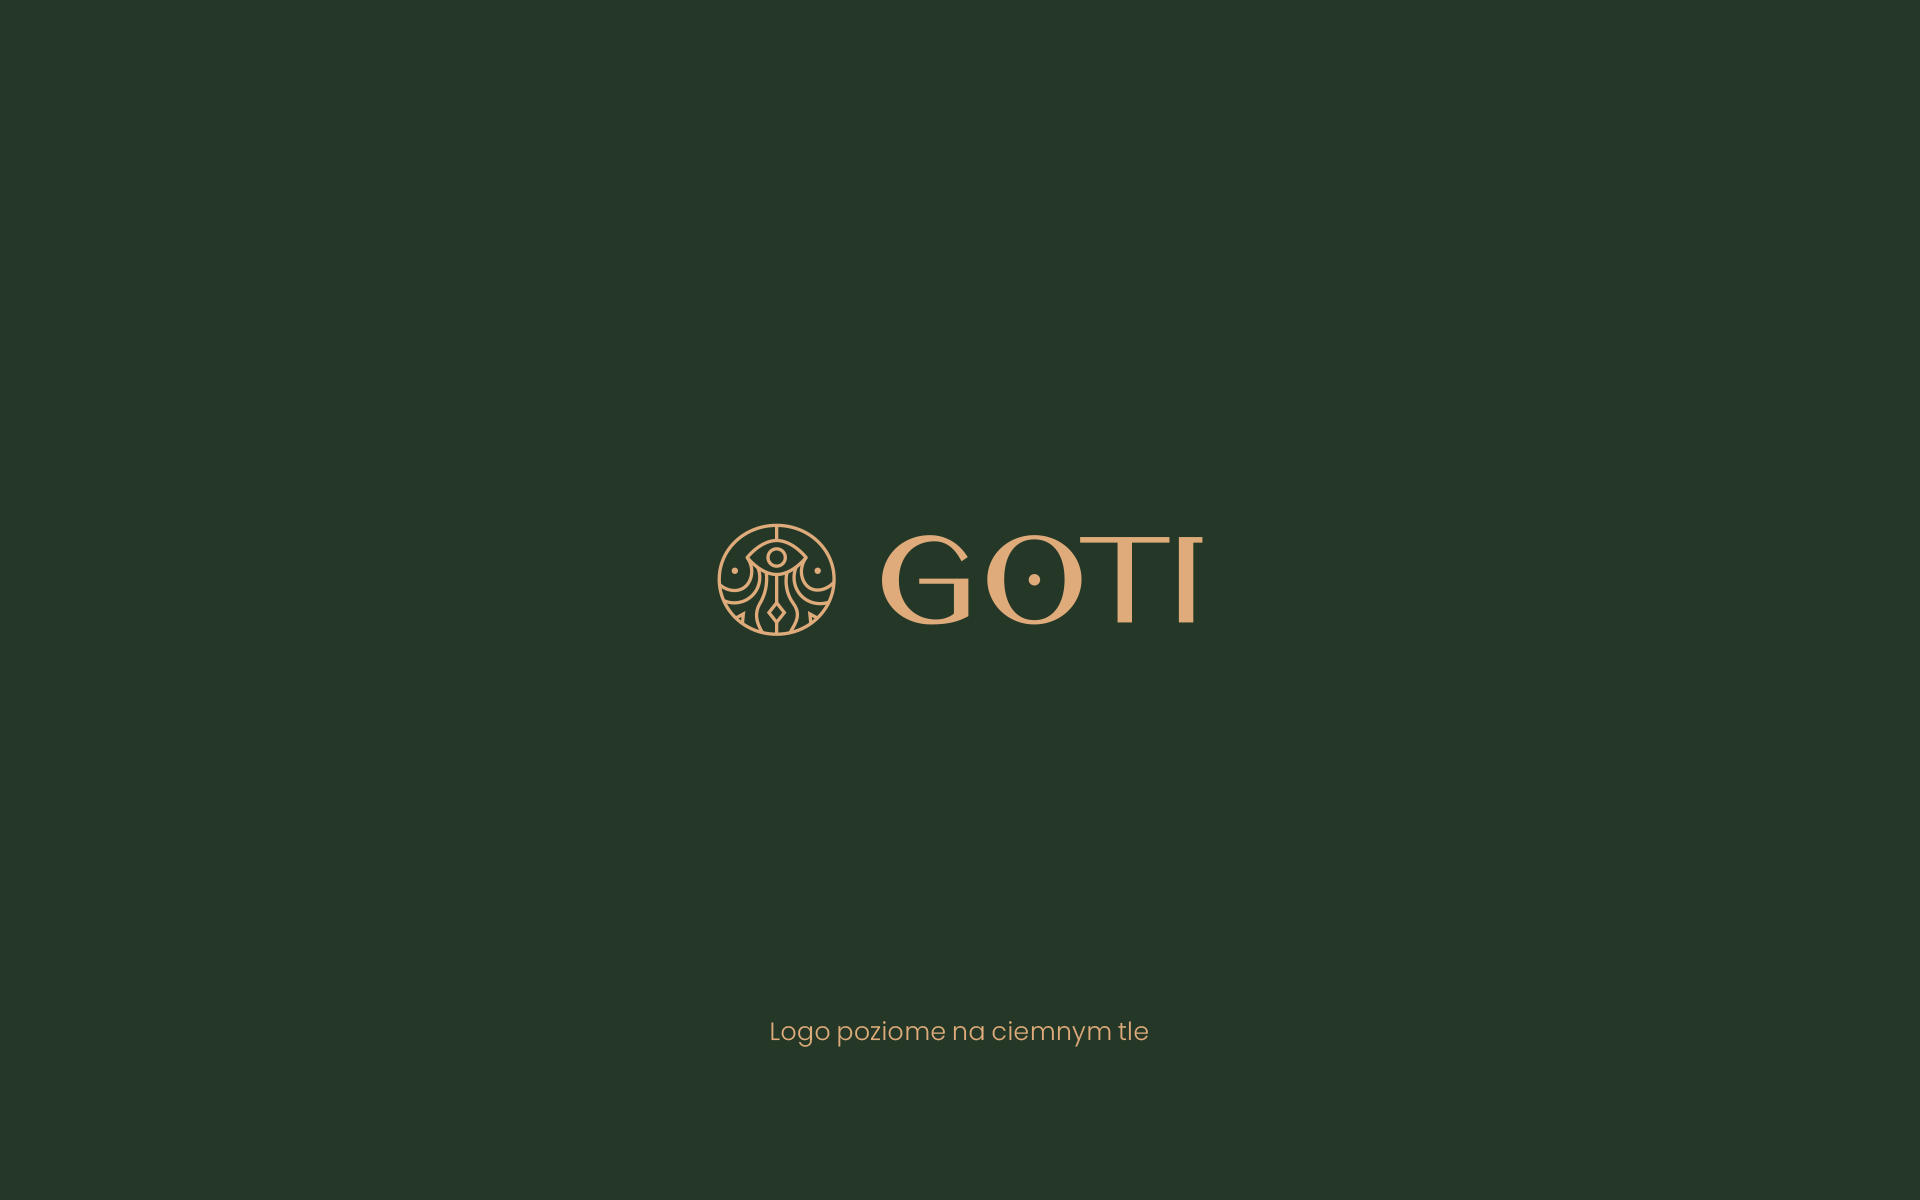 Goti logo